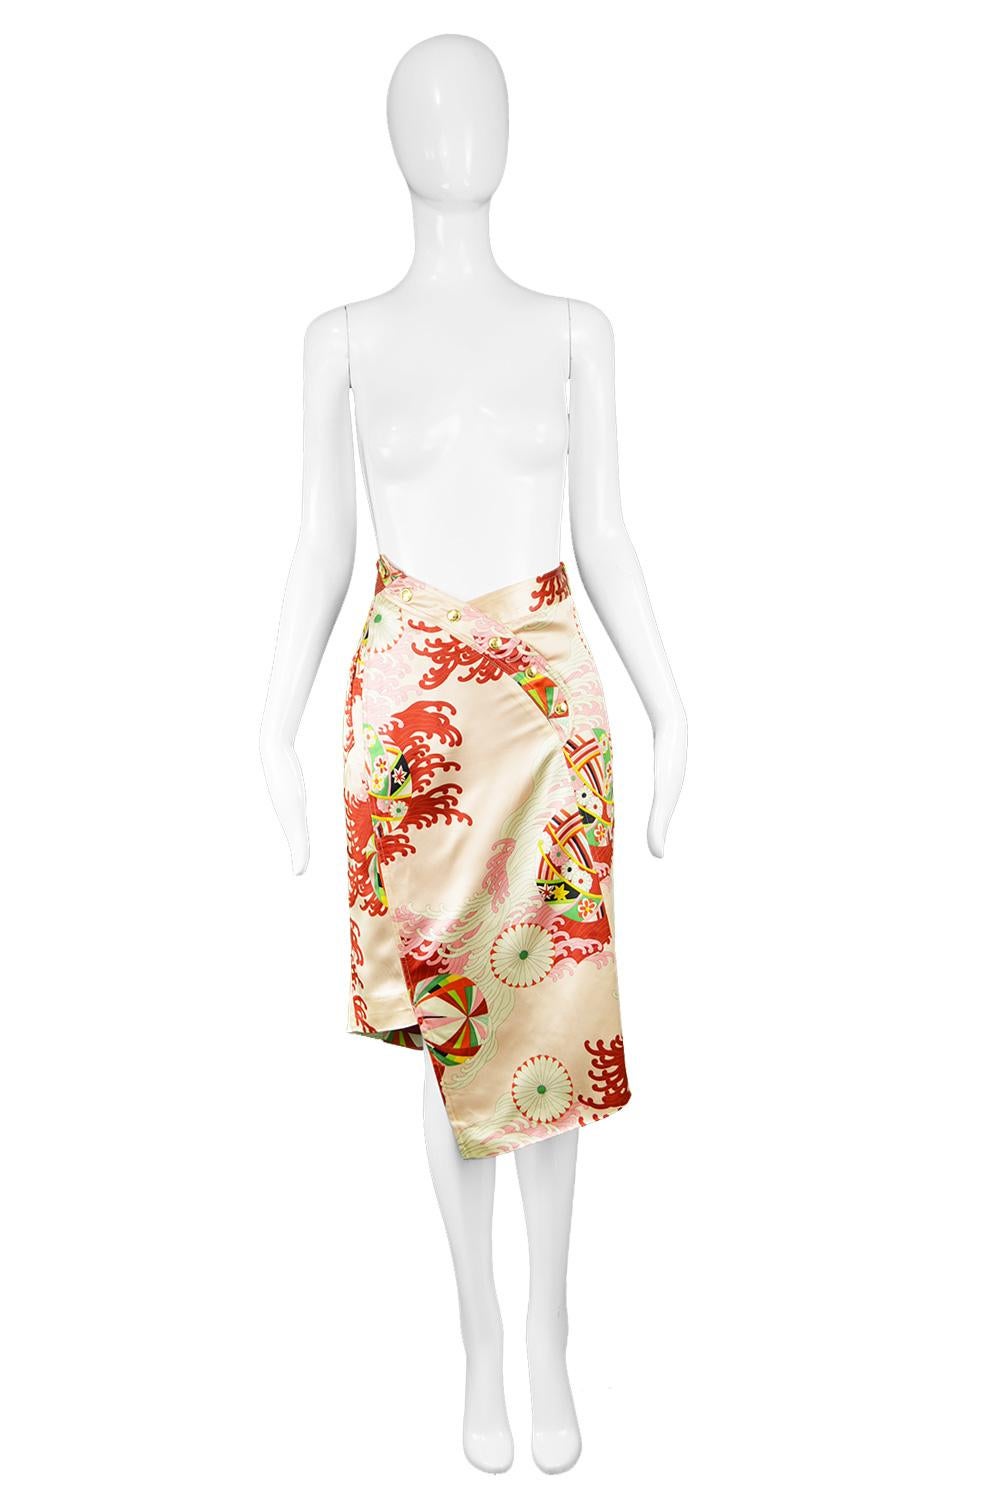 Christian Dior by John Galliano Oriental Asian Print Pink Satin Asymmetrical Skirt

Estimated Size: UK 10/ US 6/ EU 38. Please check measurements. 
Waist -  28” / 71cm
Hips - up to 38” / 96cm
Length (Waist to Hem) - 30” / 76cm

Condition: Very Good